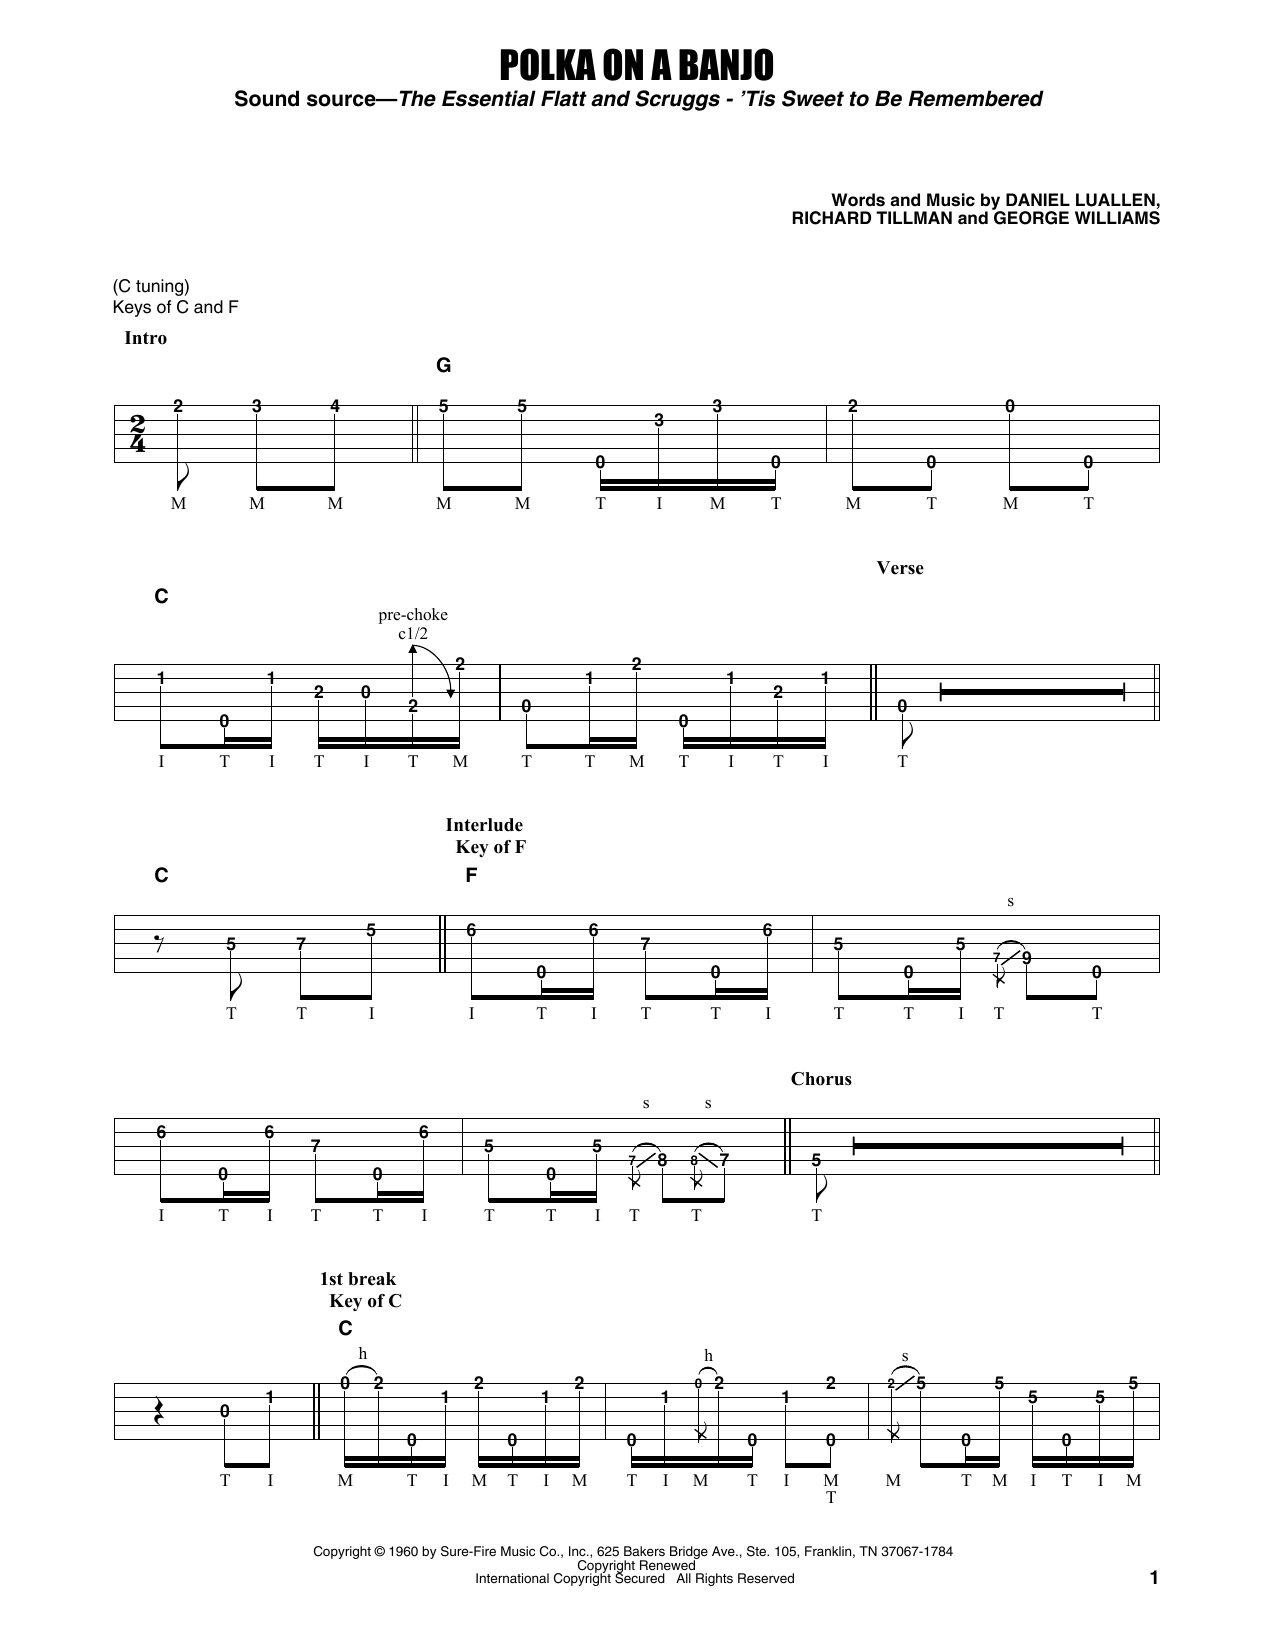 Download Flatt & Scruggs Polka On A Banjo Sheet Music and learn how to play Banjo Tab PDF digital score in minutes